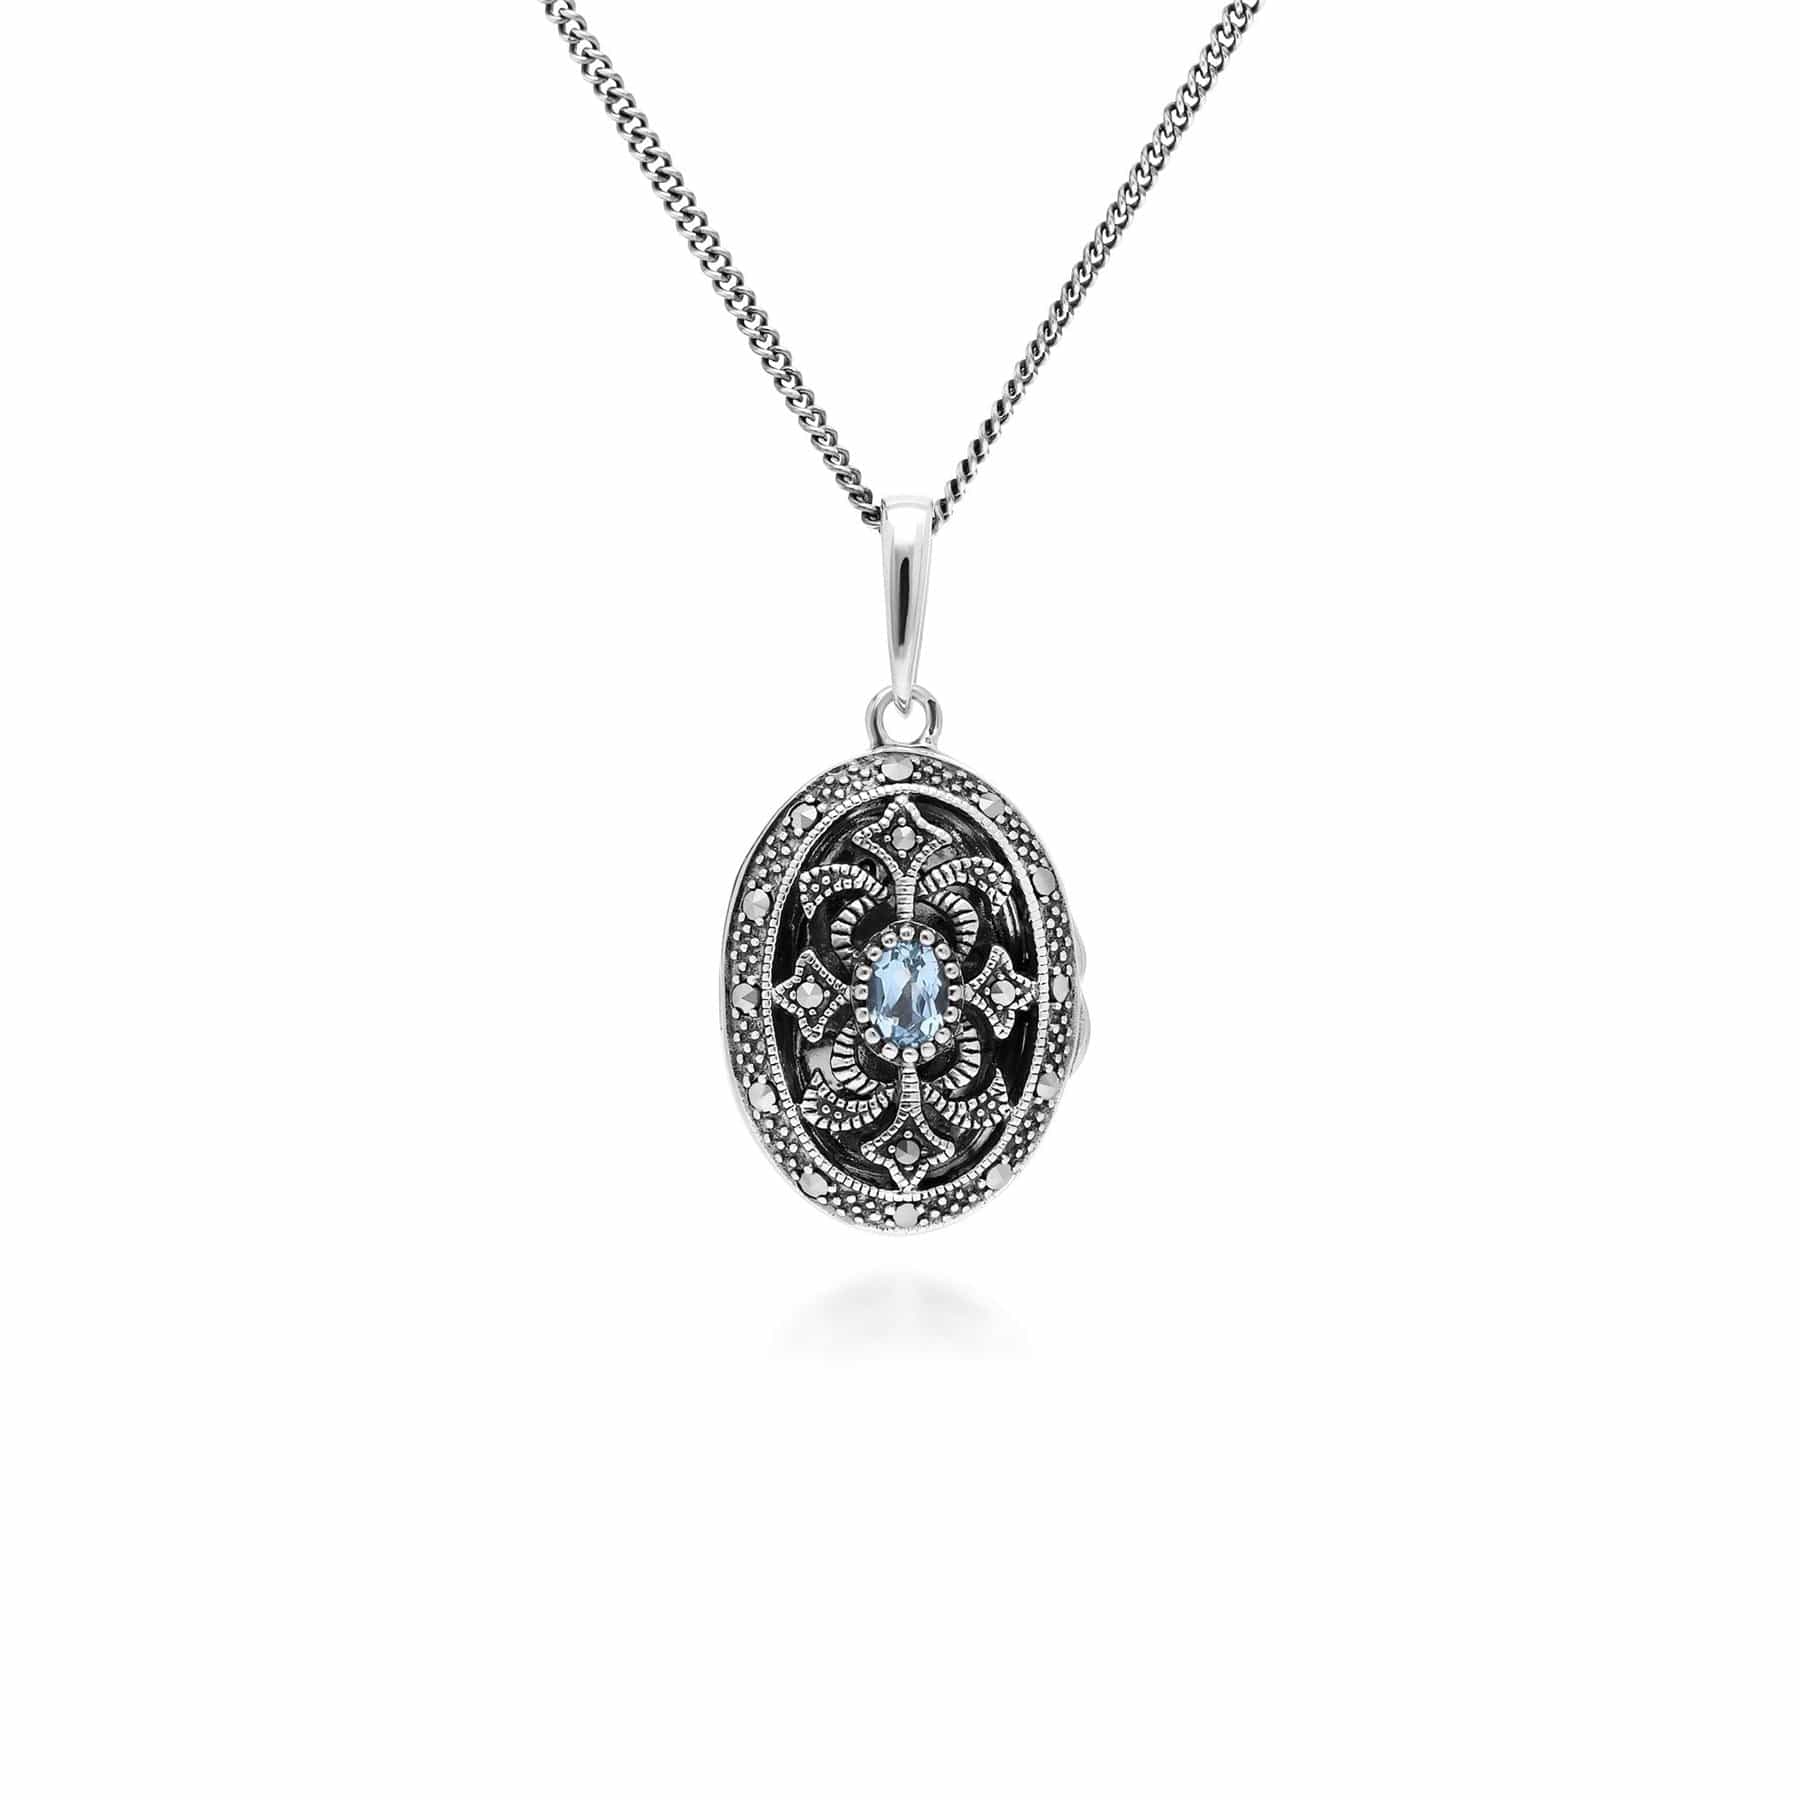 Art Nouveau Style Oval Aquamarine & Marcasite Locket Necklace in 925 Sterling Silver - Gemondo